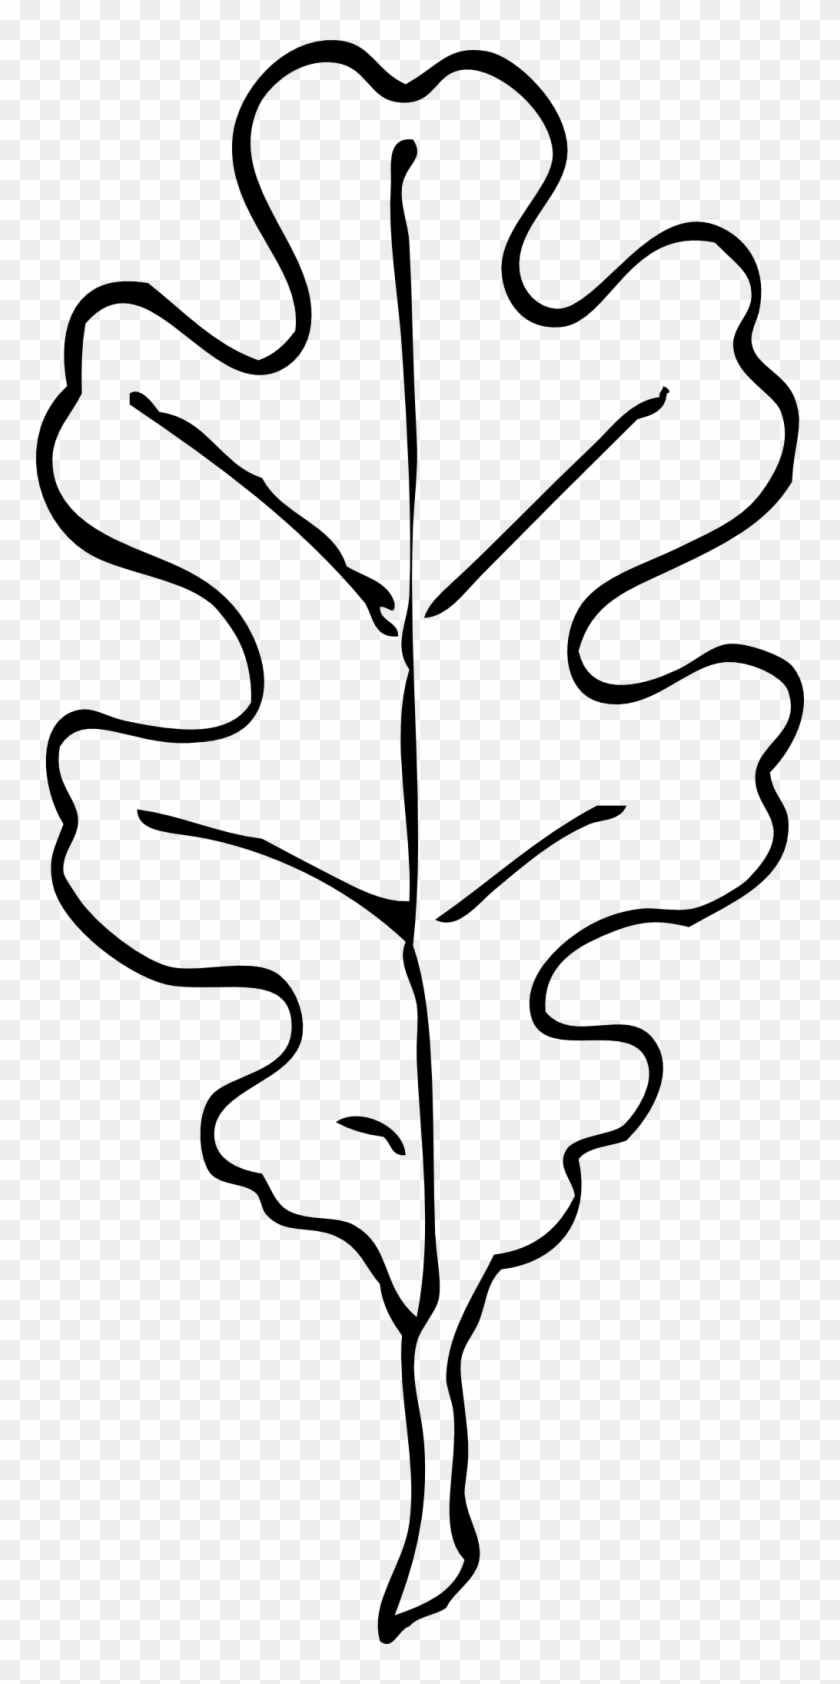 Oak Tree Clip Art Silhouette - Oak Leaf Clip Art Black And White #271882